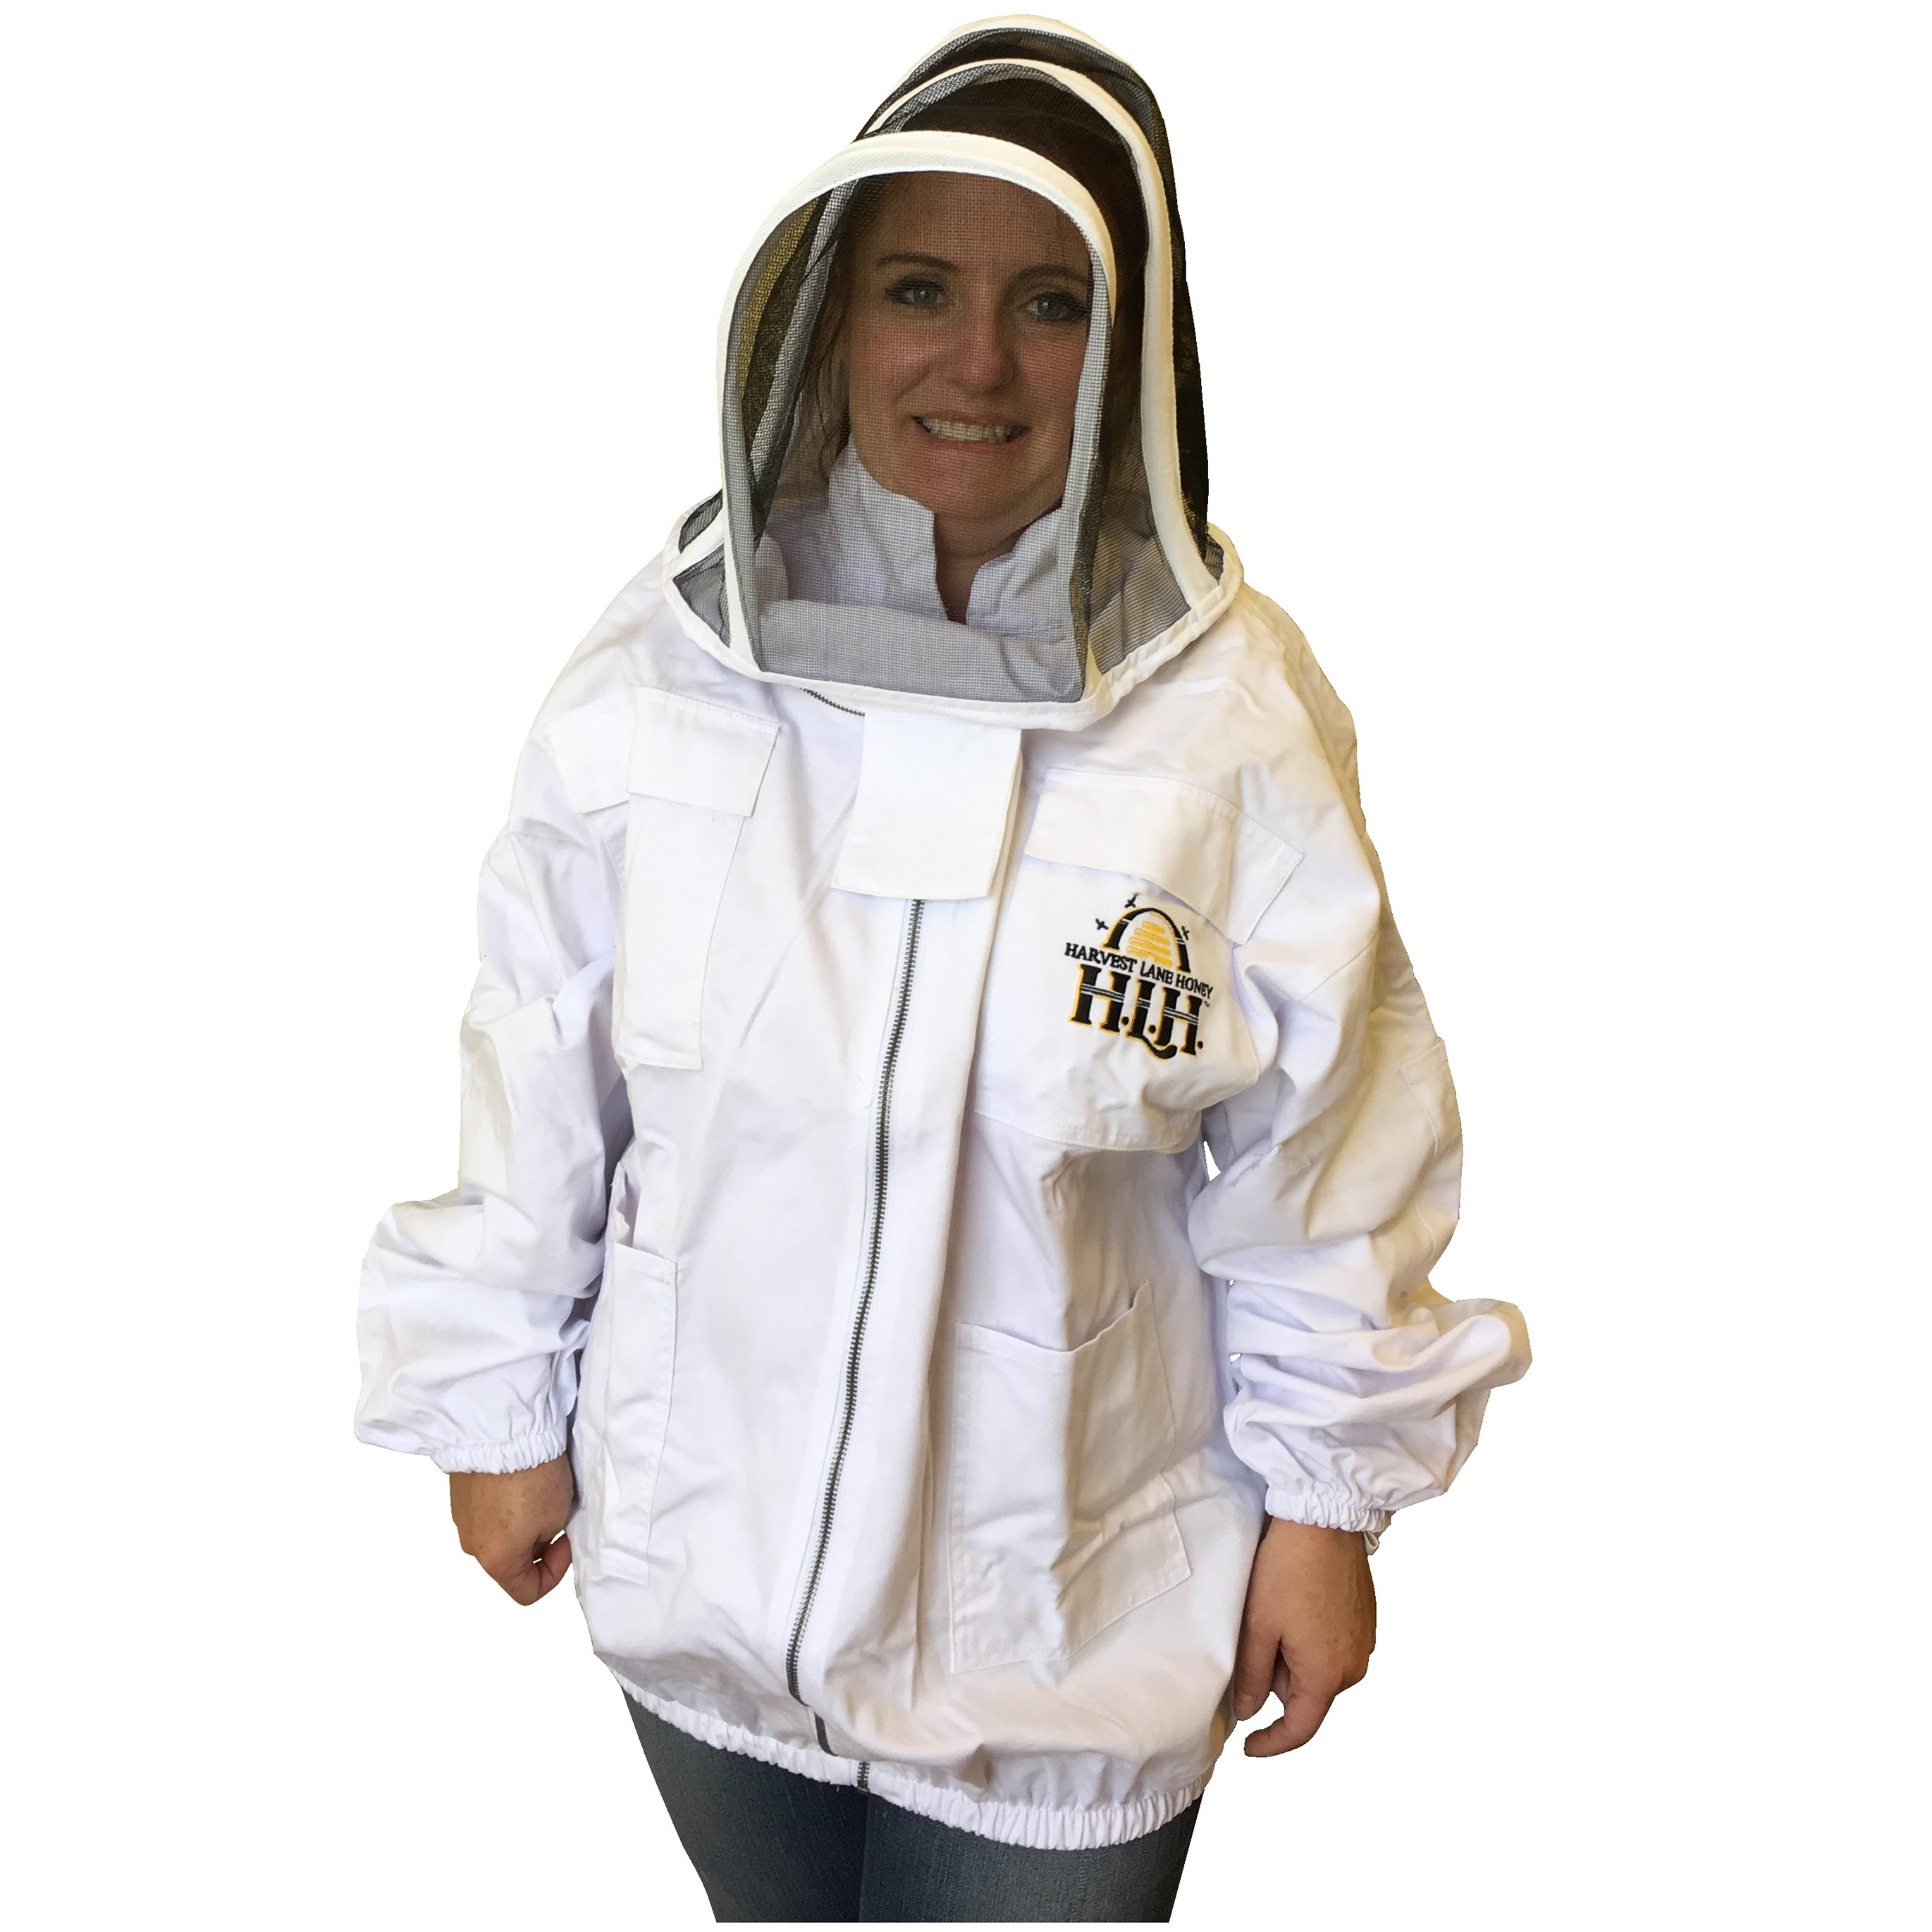 CLOTHSJXL-102 Beekeeper Jacket with Hood, XL, Zipper, Polycotton, White